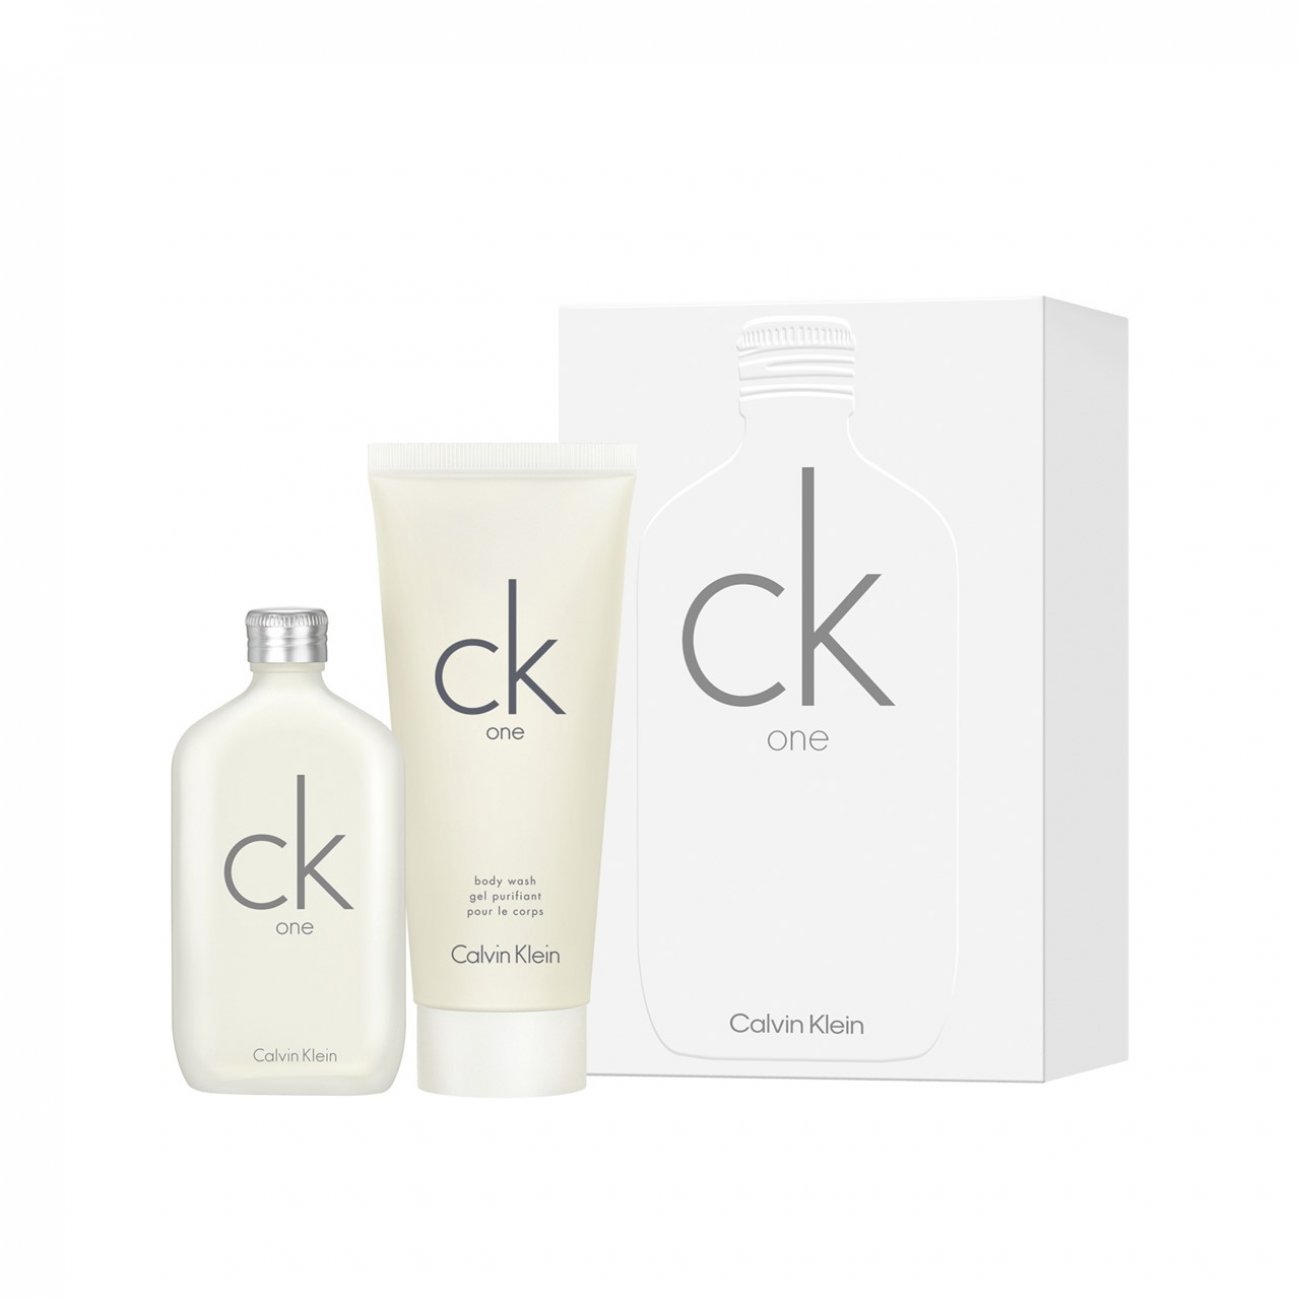 huurling Hesje chef Buy GIFT SET:Calvin Klein CK One Eau de Toilette 50ml + Body Wash 100ml  (1.7+3.38fl oz) · USA